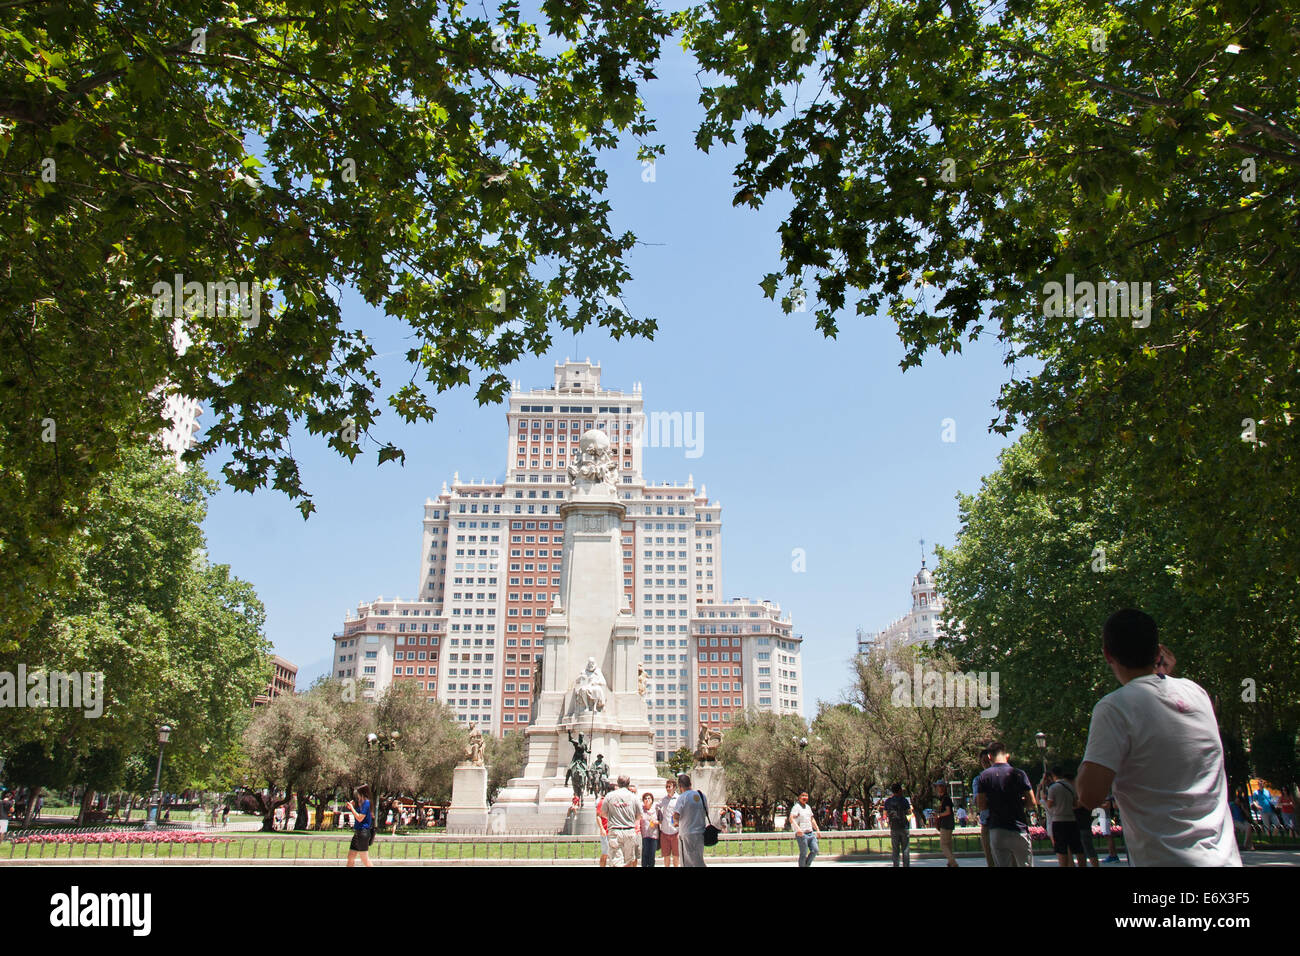 Edificio España - Spanien Gebäude Wolkenkratzer und Plaza de España Stockfoto